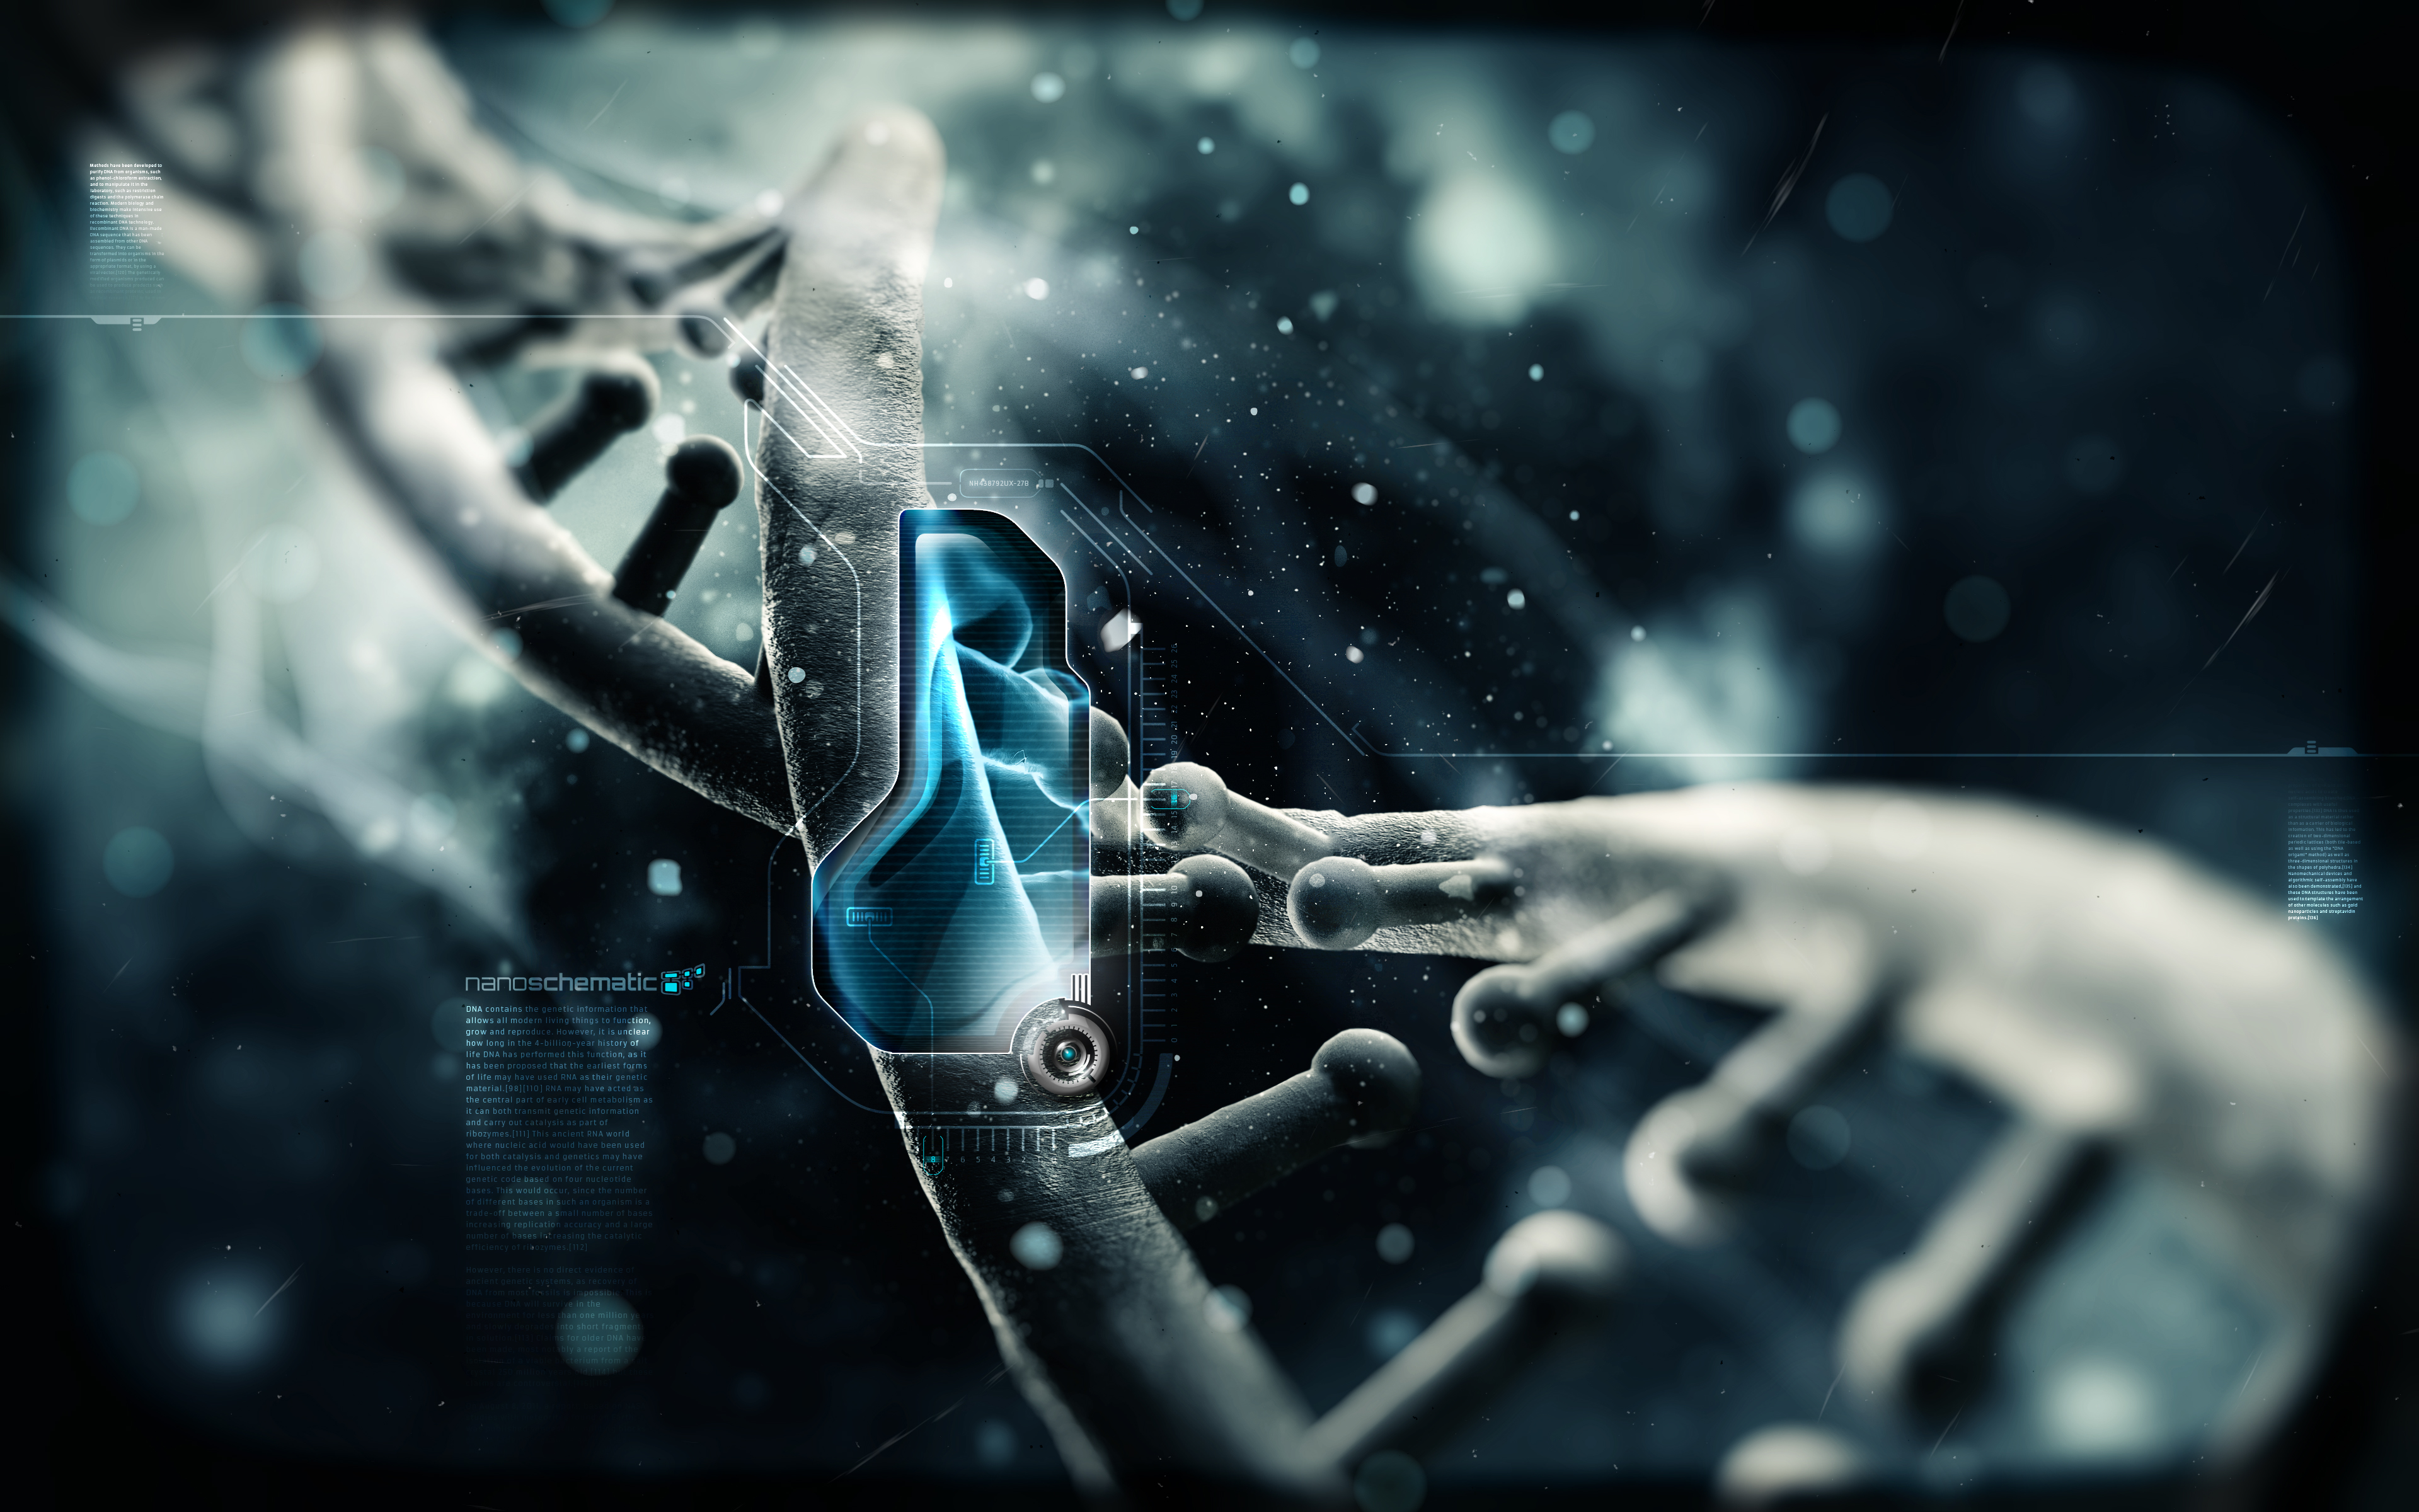 3D DNA Wallpaper  HD Images New  Medical wallpaper Science background  Free desktop wallpaper